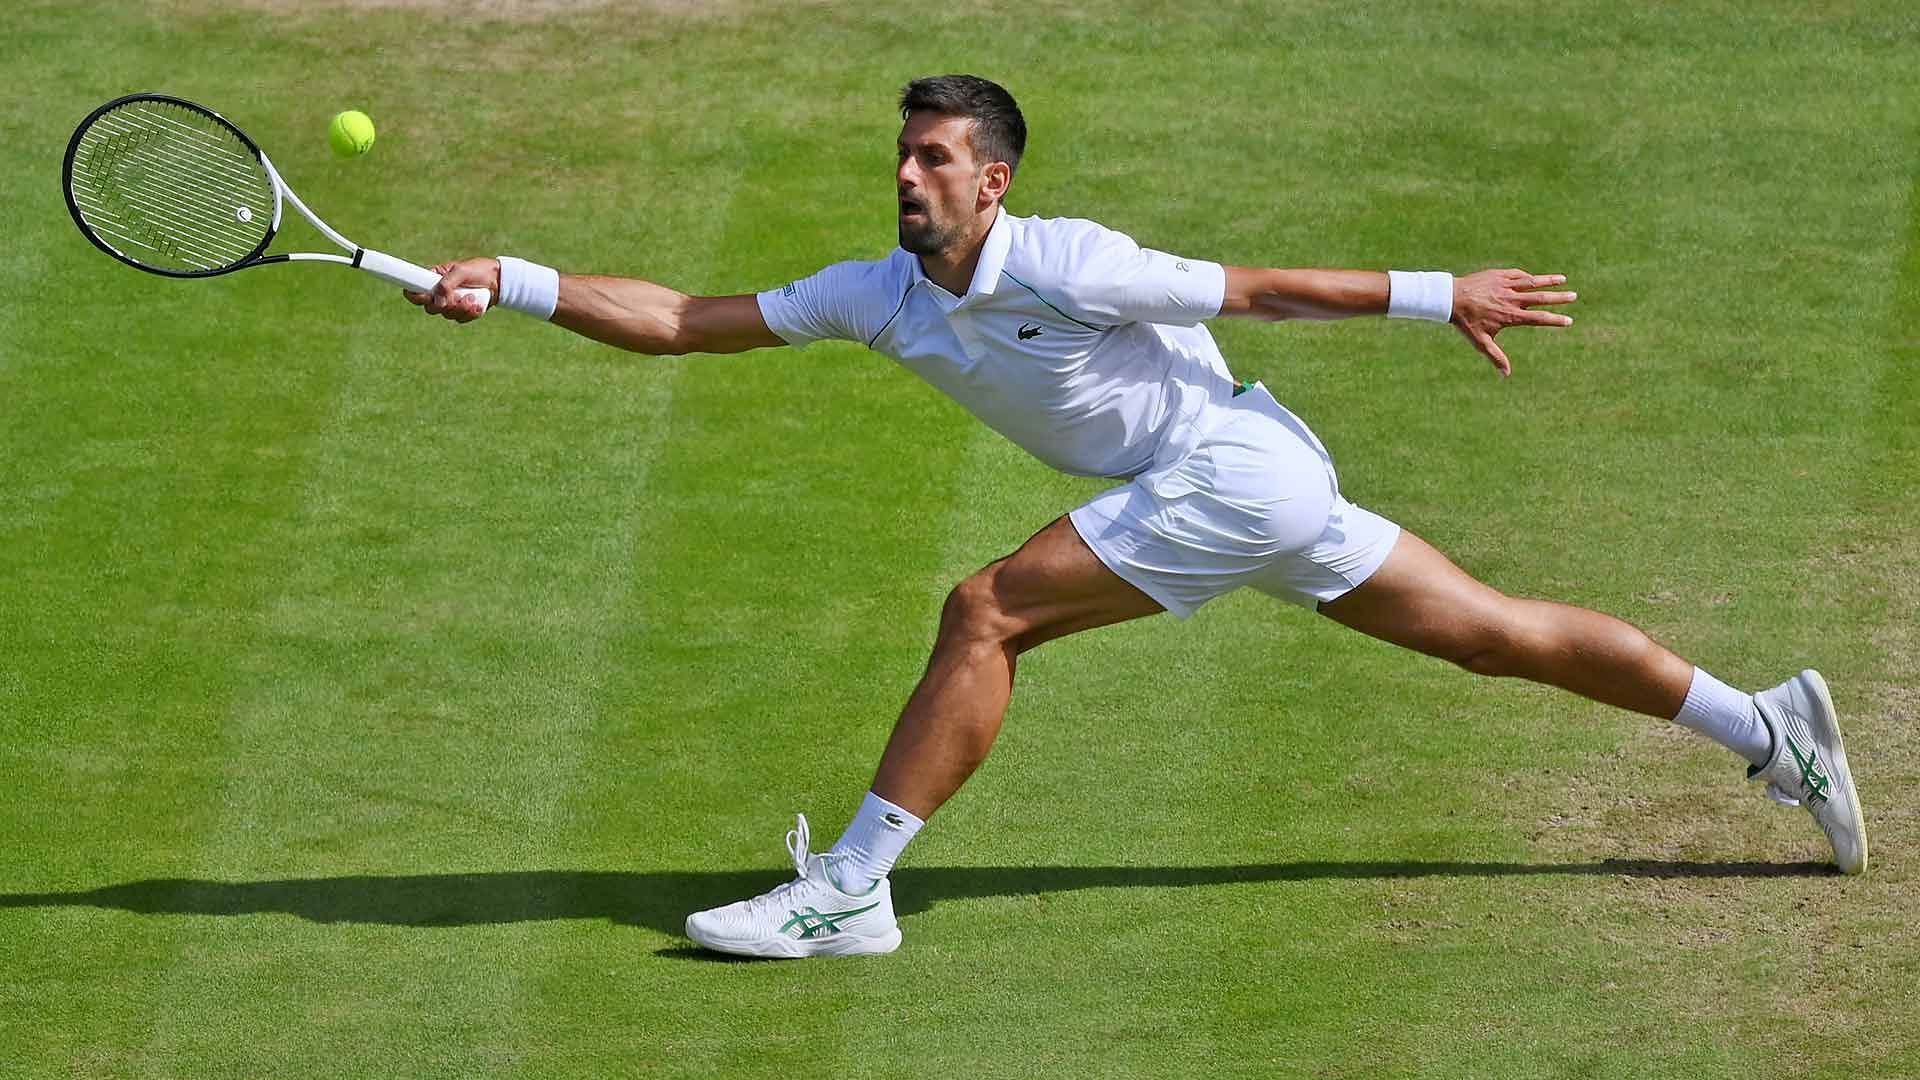 Novak Djokovic came back superbly to reach his eighth Wimbledon final